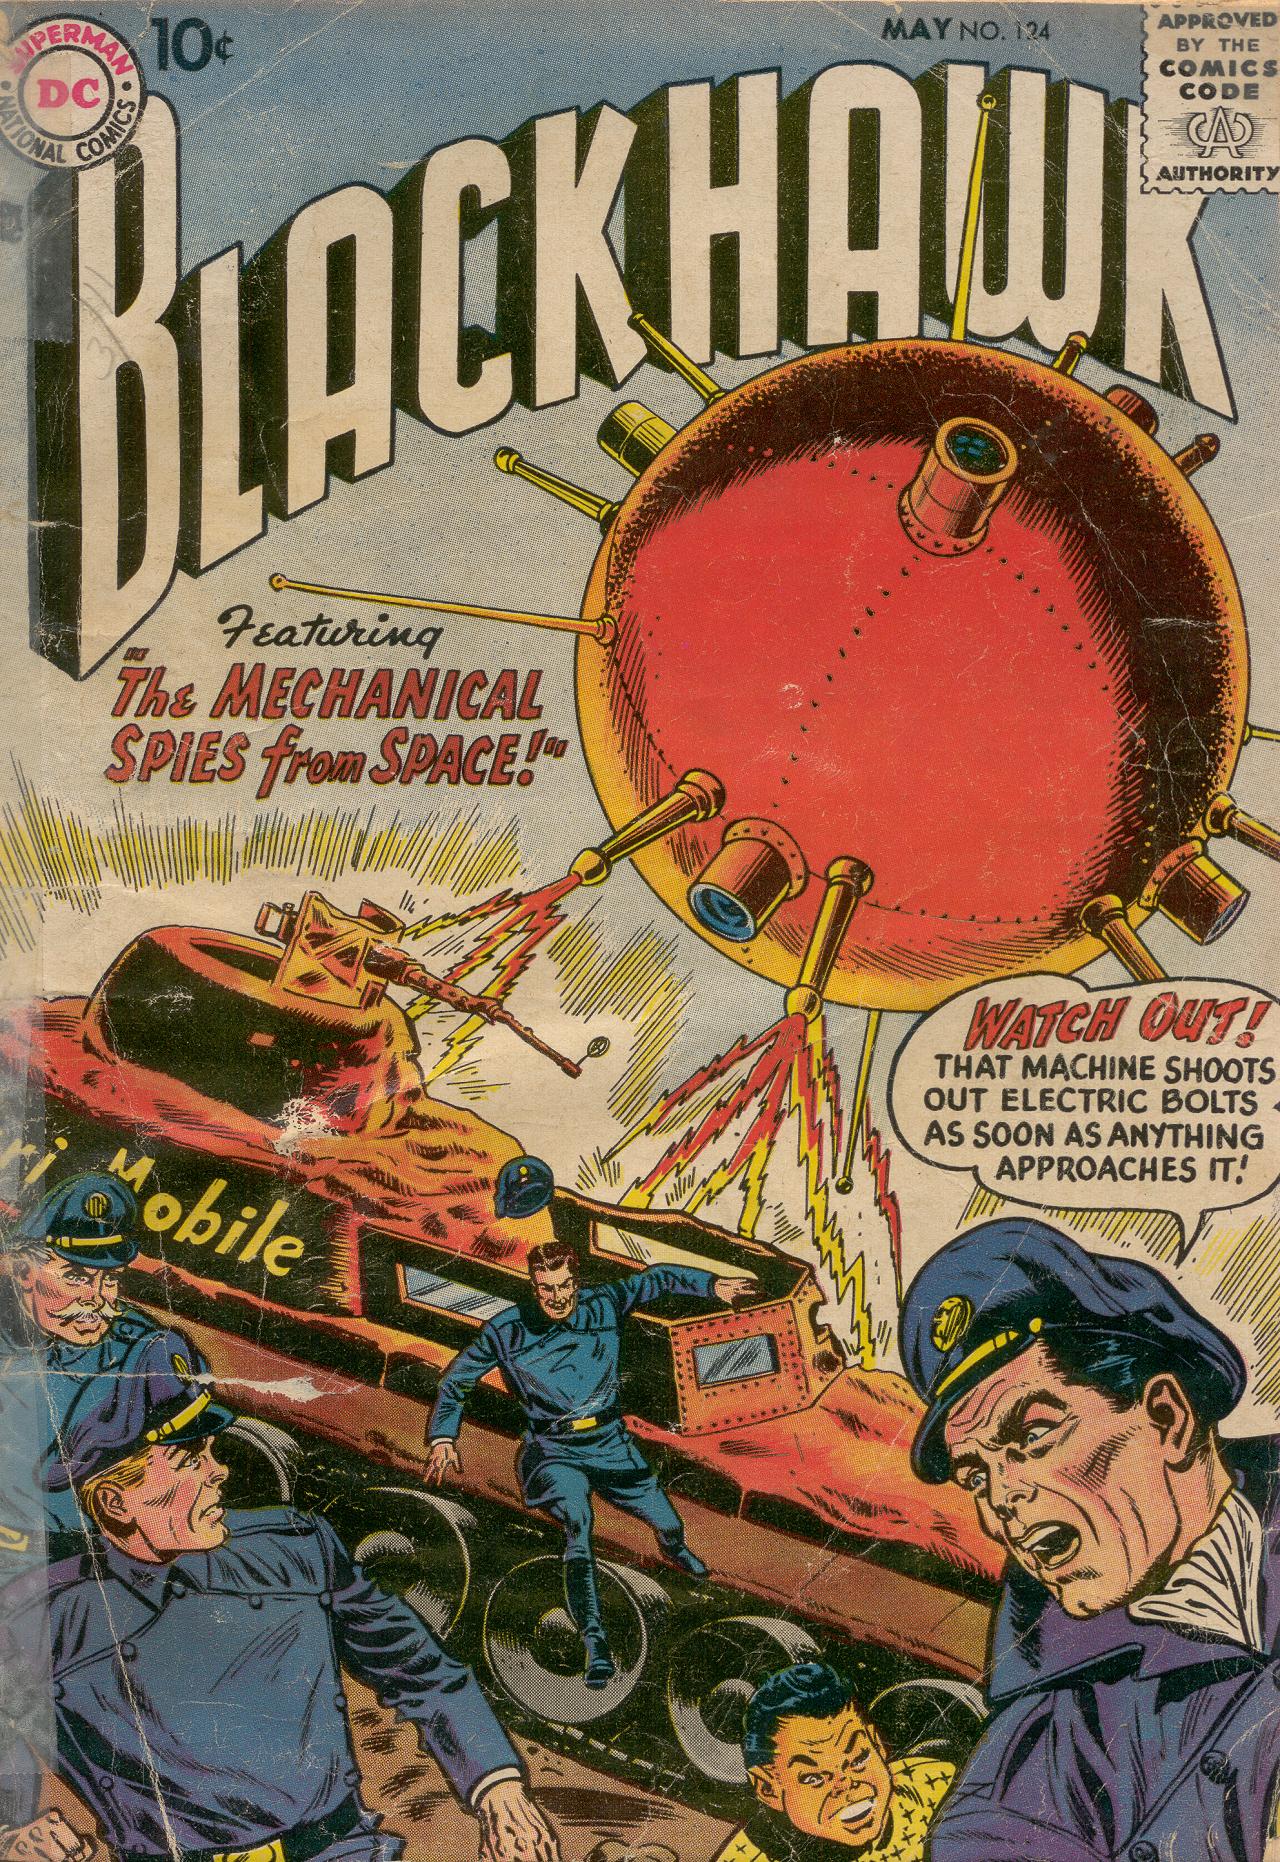 Blackhawk (1957) Issue #124 #17 - English 1